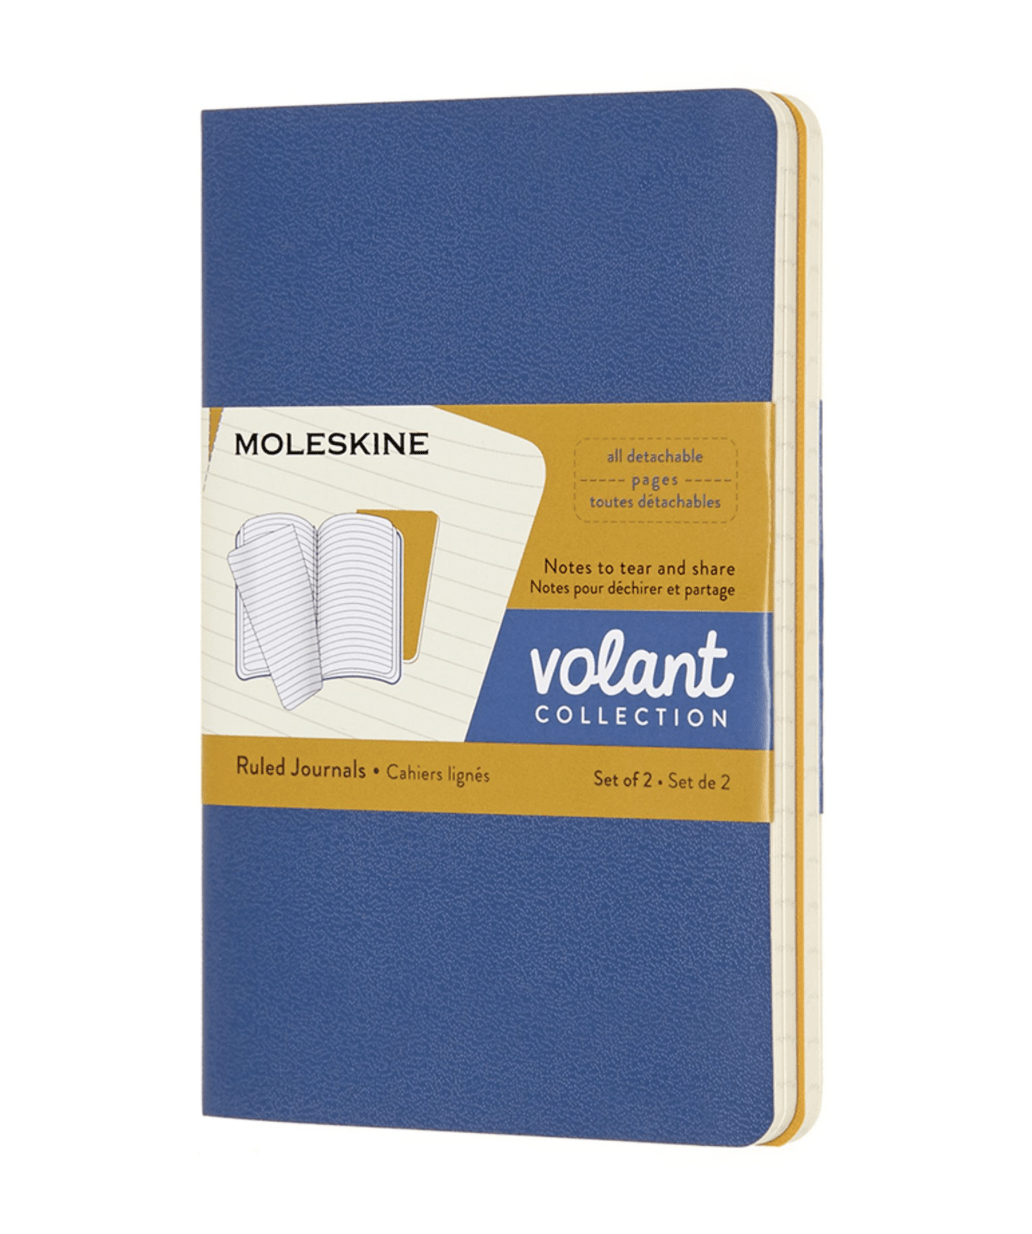 Moleskine Notebook Forget-Me-Not Blue/Amber Yellow / Pocket Moleskine Volant Journals - Ruled Set of 2